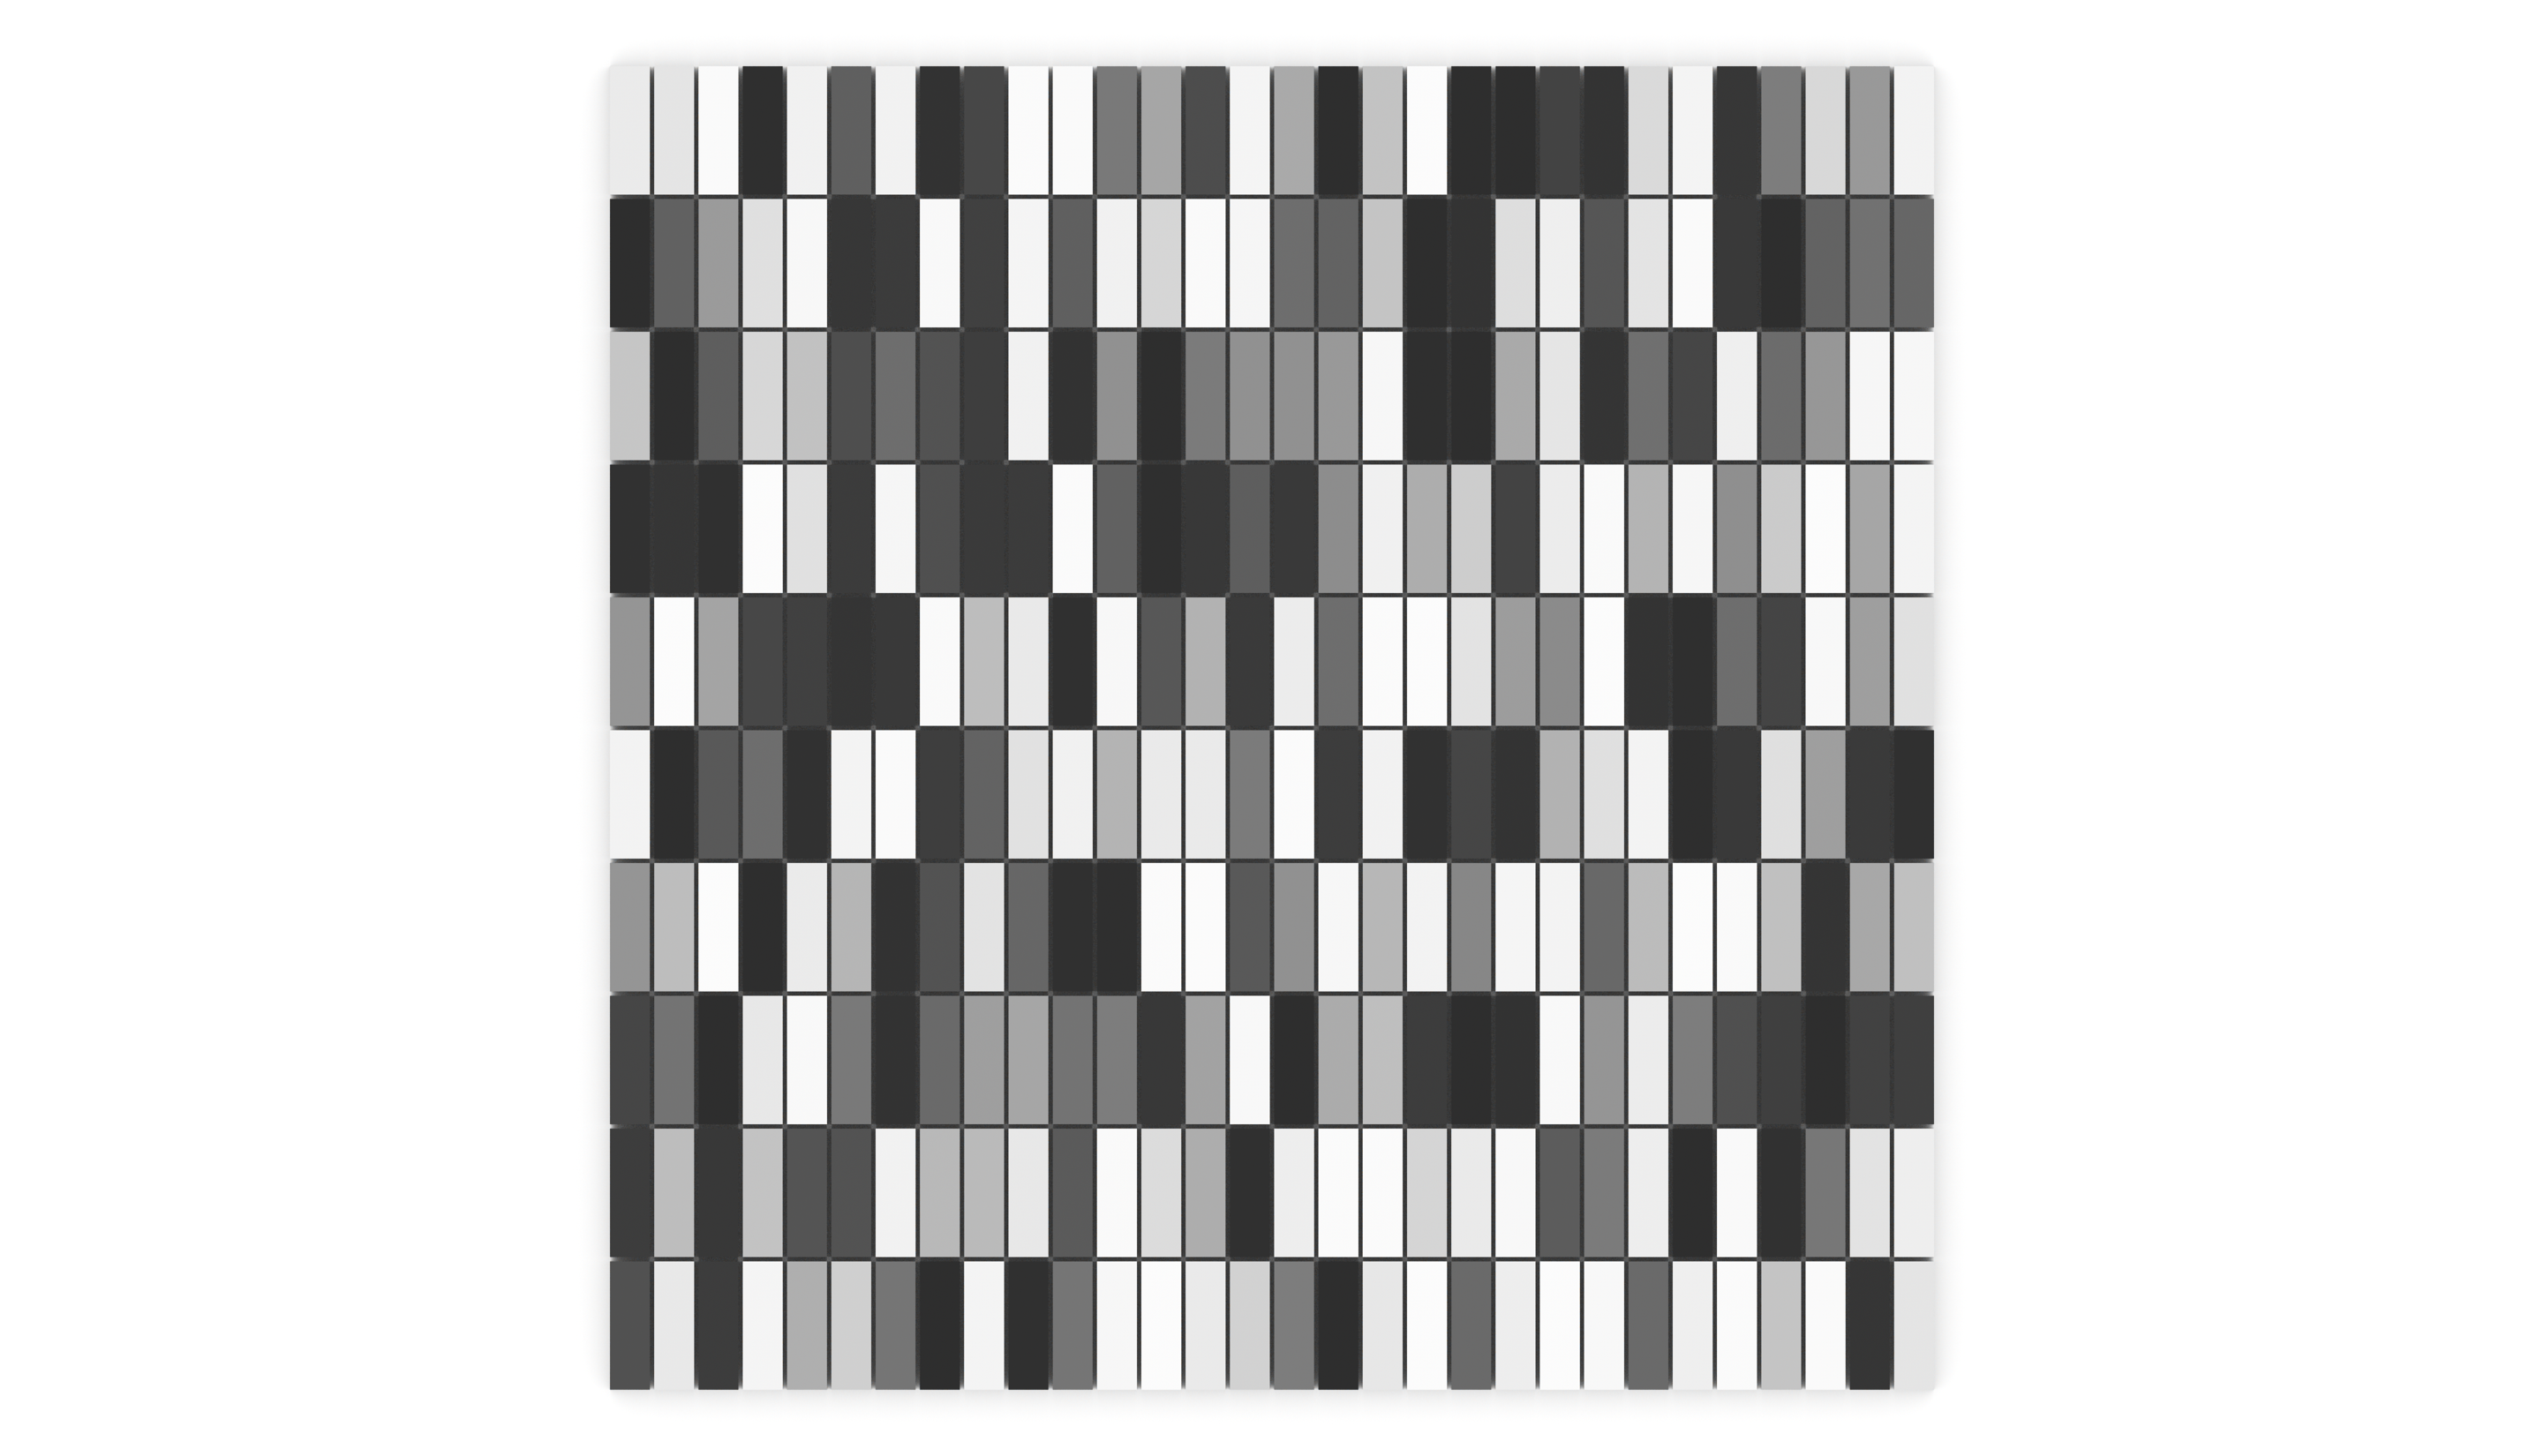 Paving pattern with random gradient